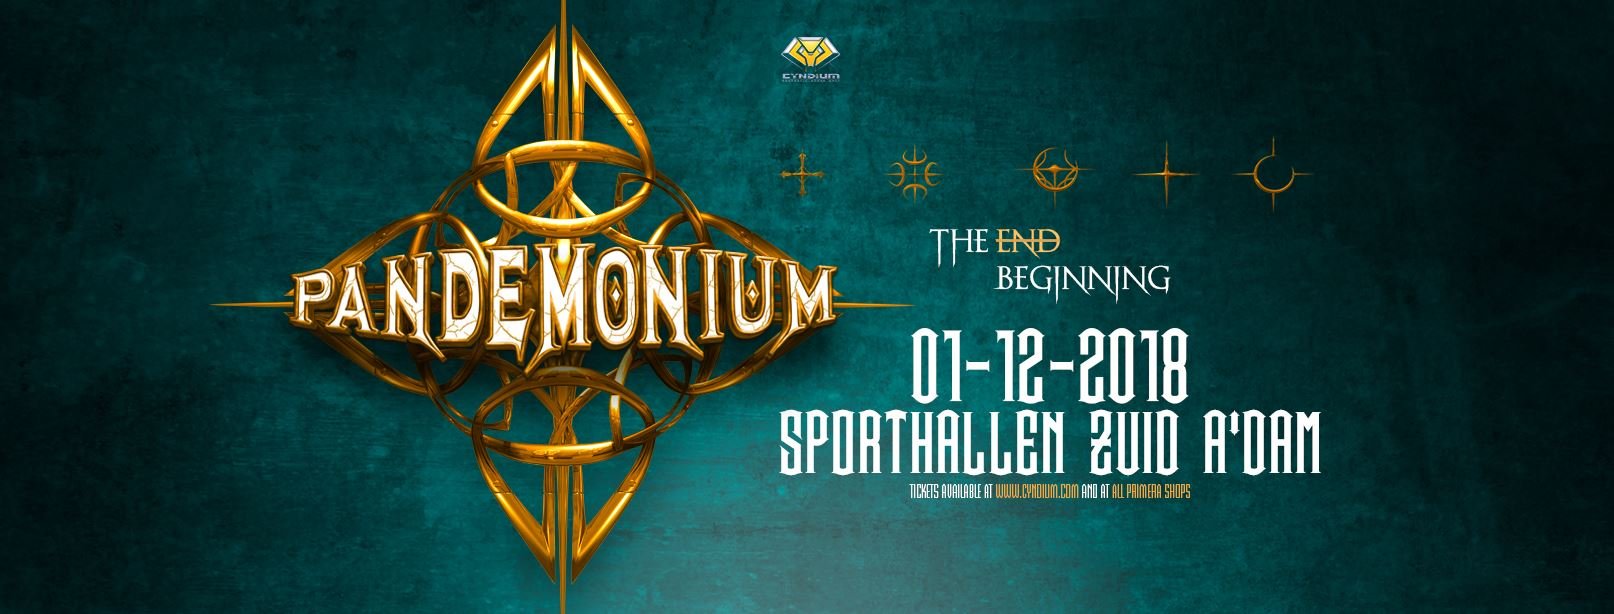 pandemonium-2018-the-endbeginning-01-12-2018